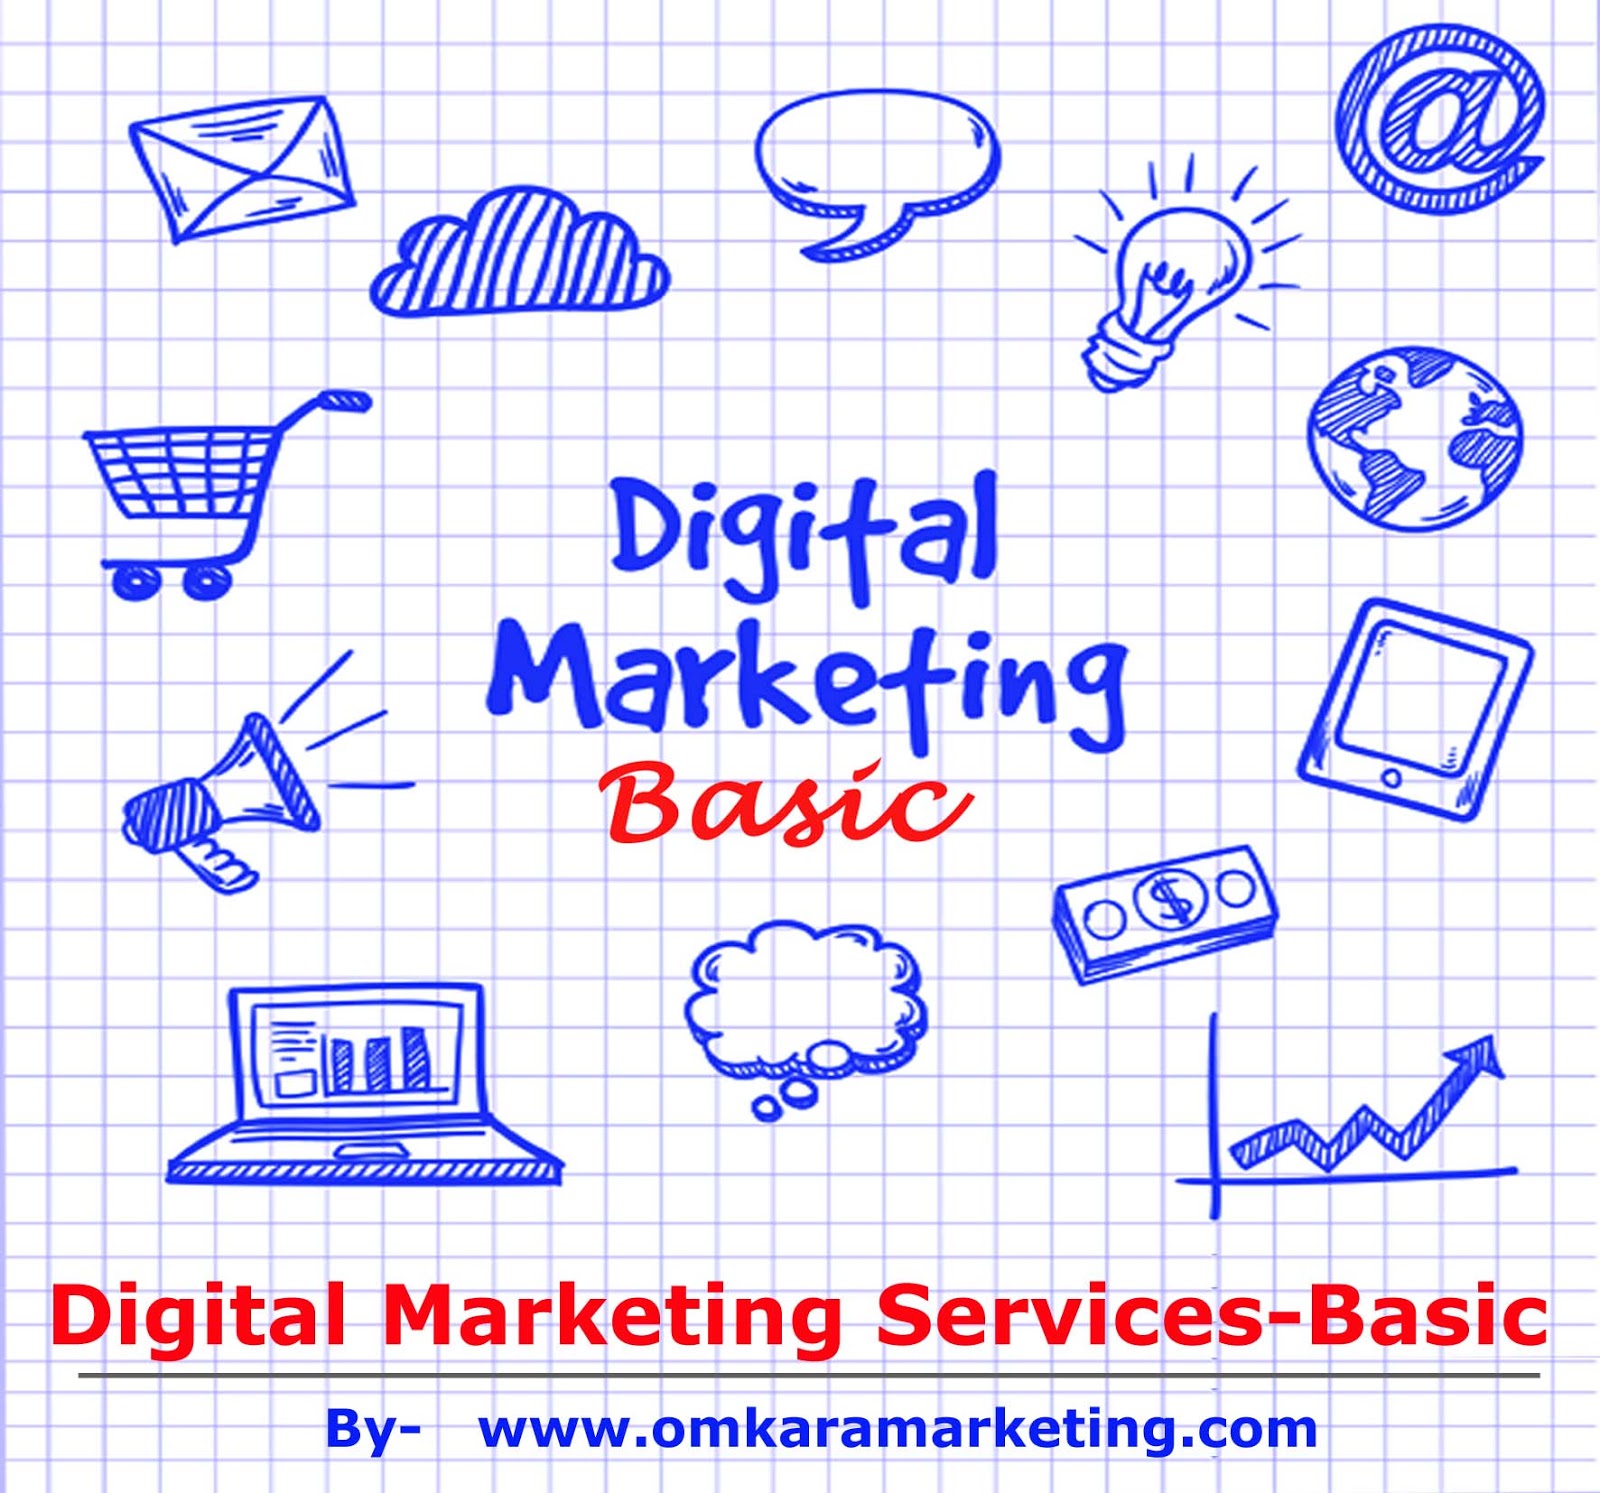 Digital Marketing Services-Basic, Digital Marketing Company, SEO, SEM – by Omkara Marketing Services